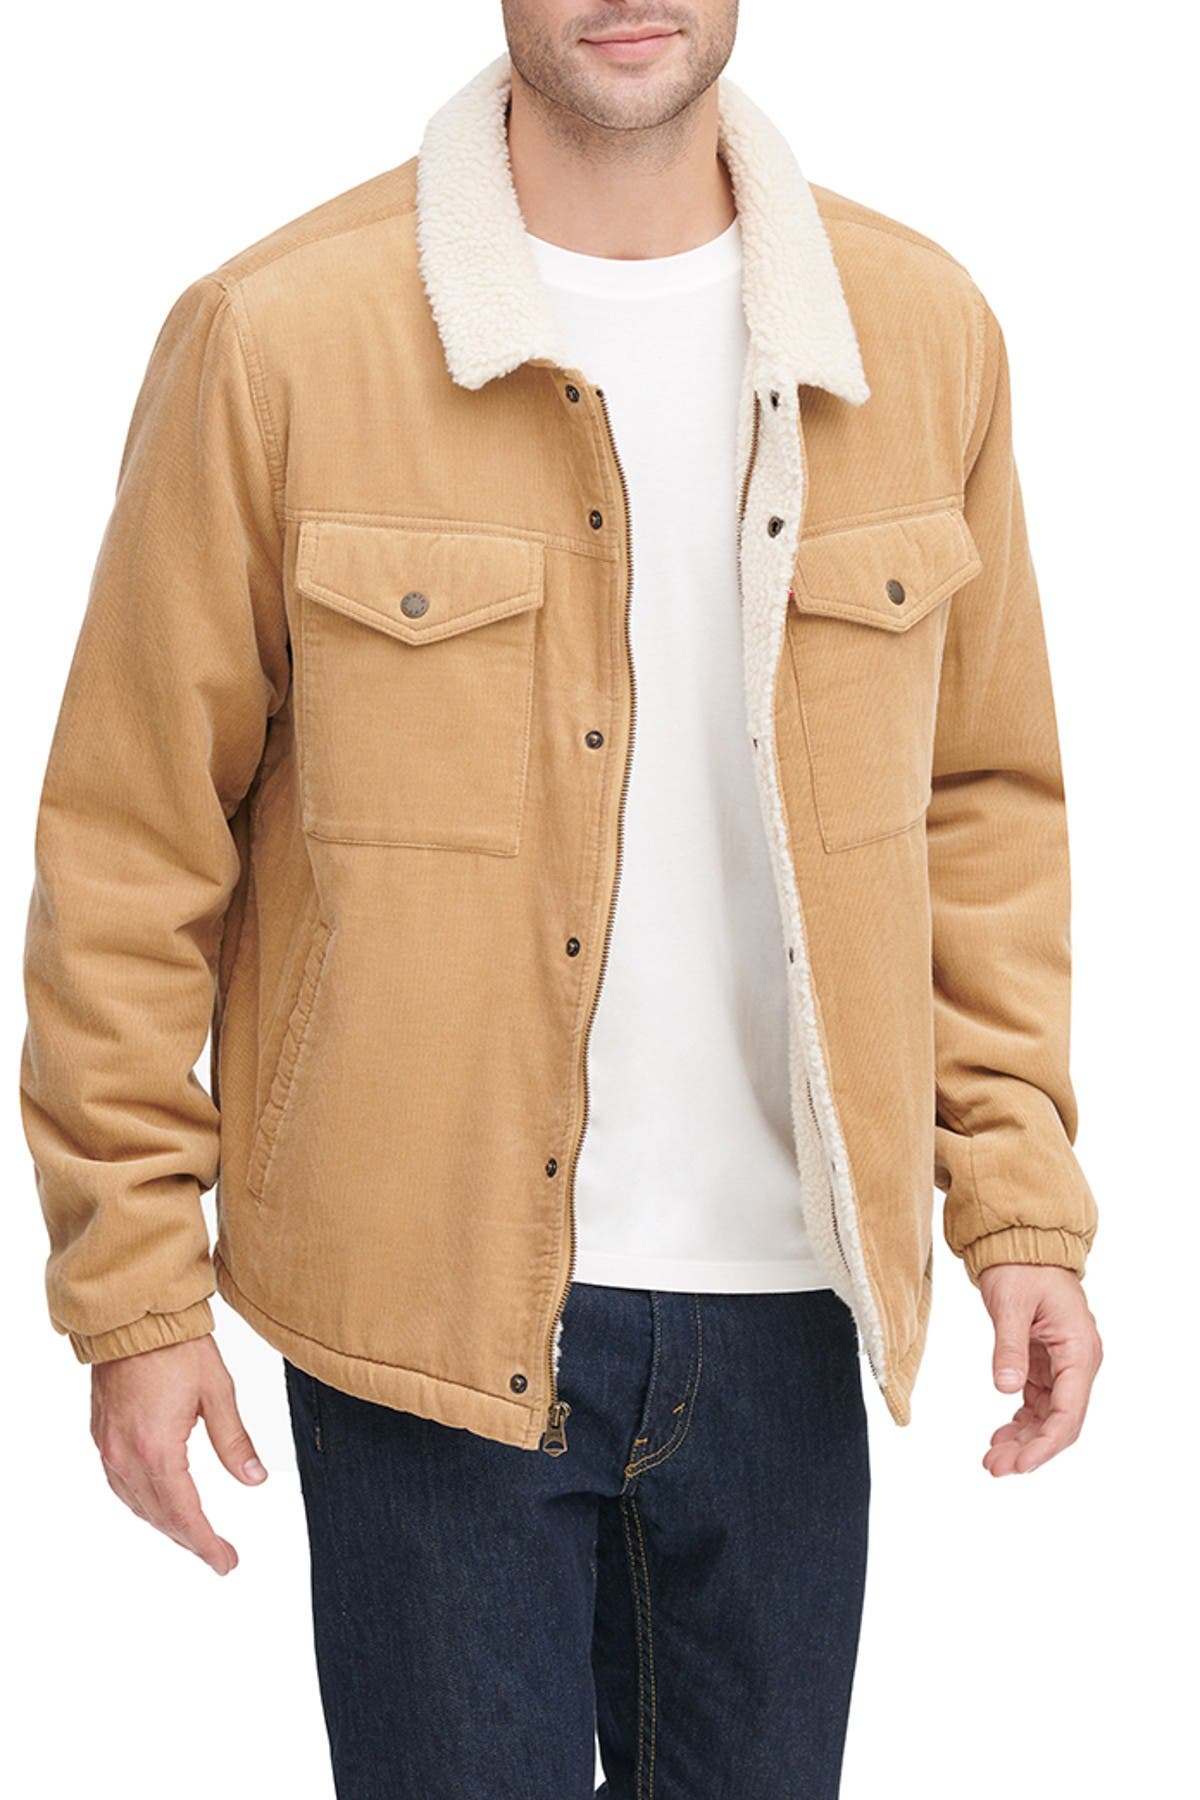 levi's chino corduroy sherpa trucker jacket